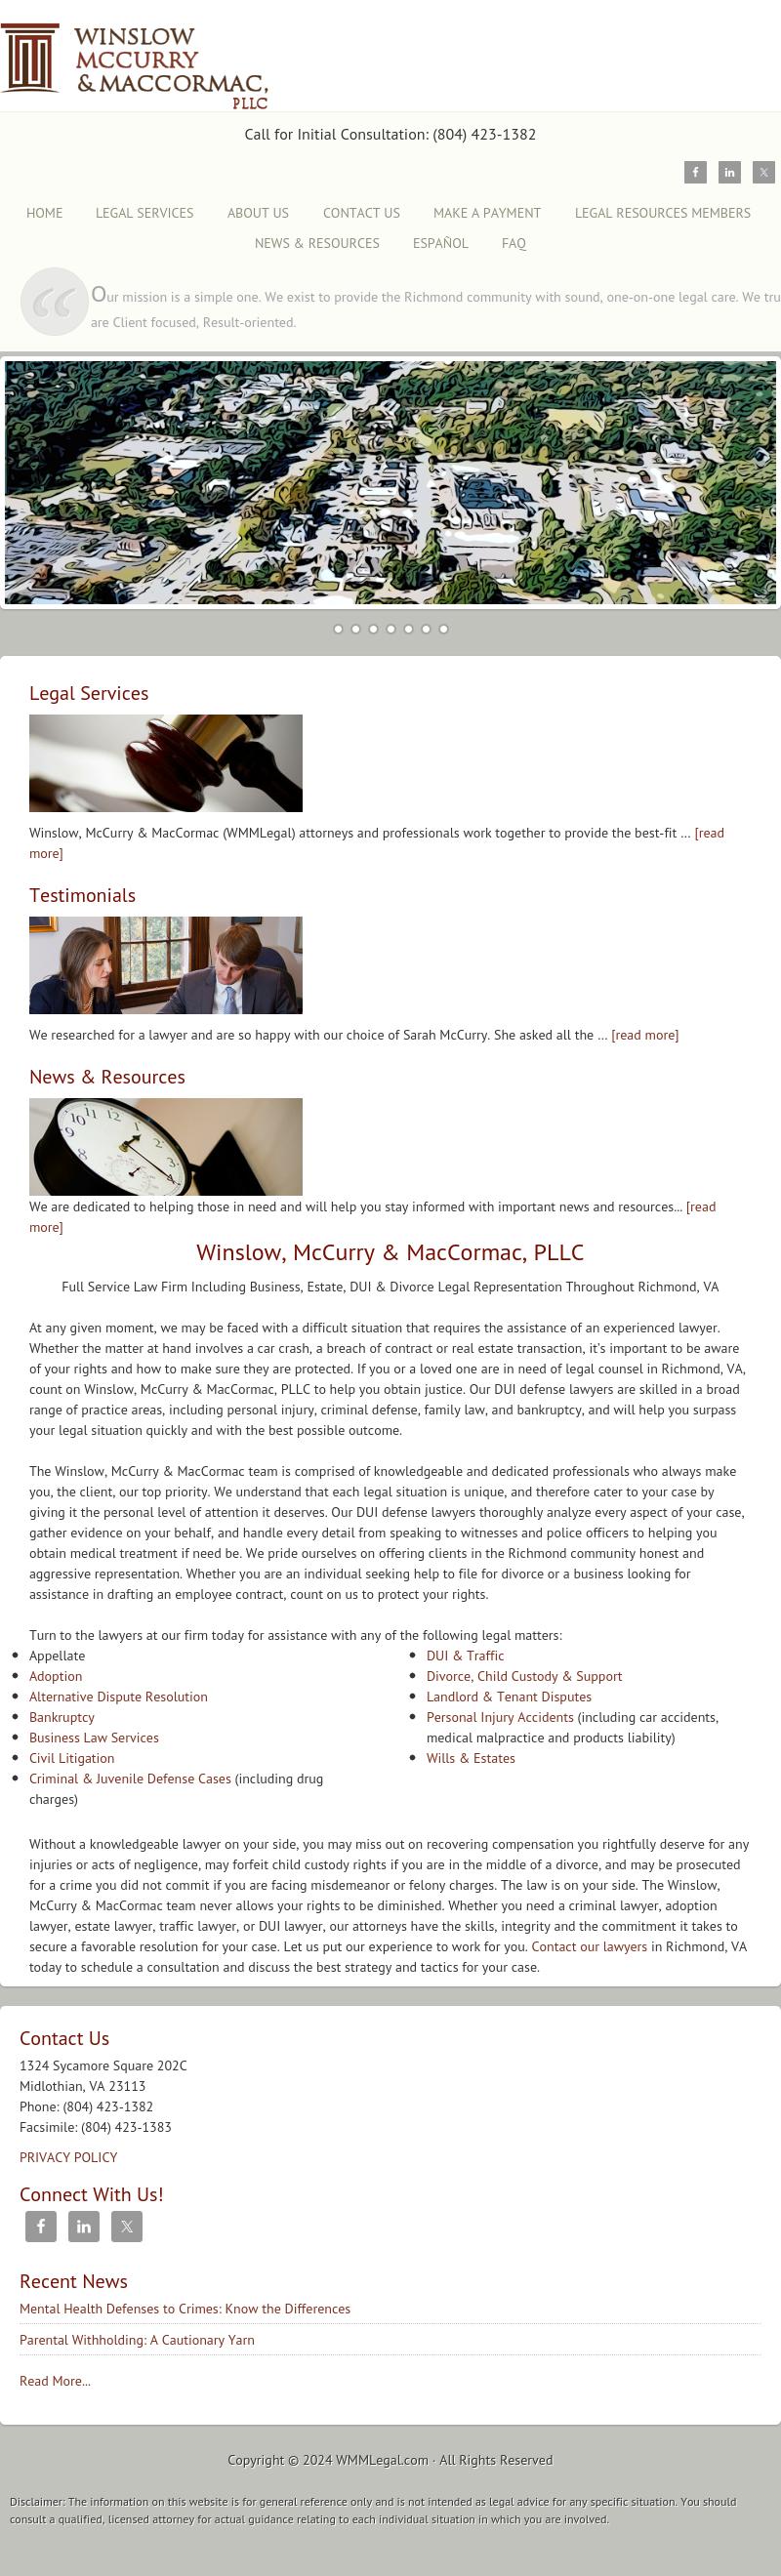 Winslow & McCurry, PLLC - Midlothian VA Lawyers